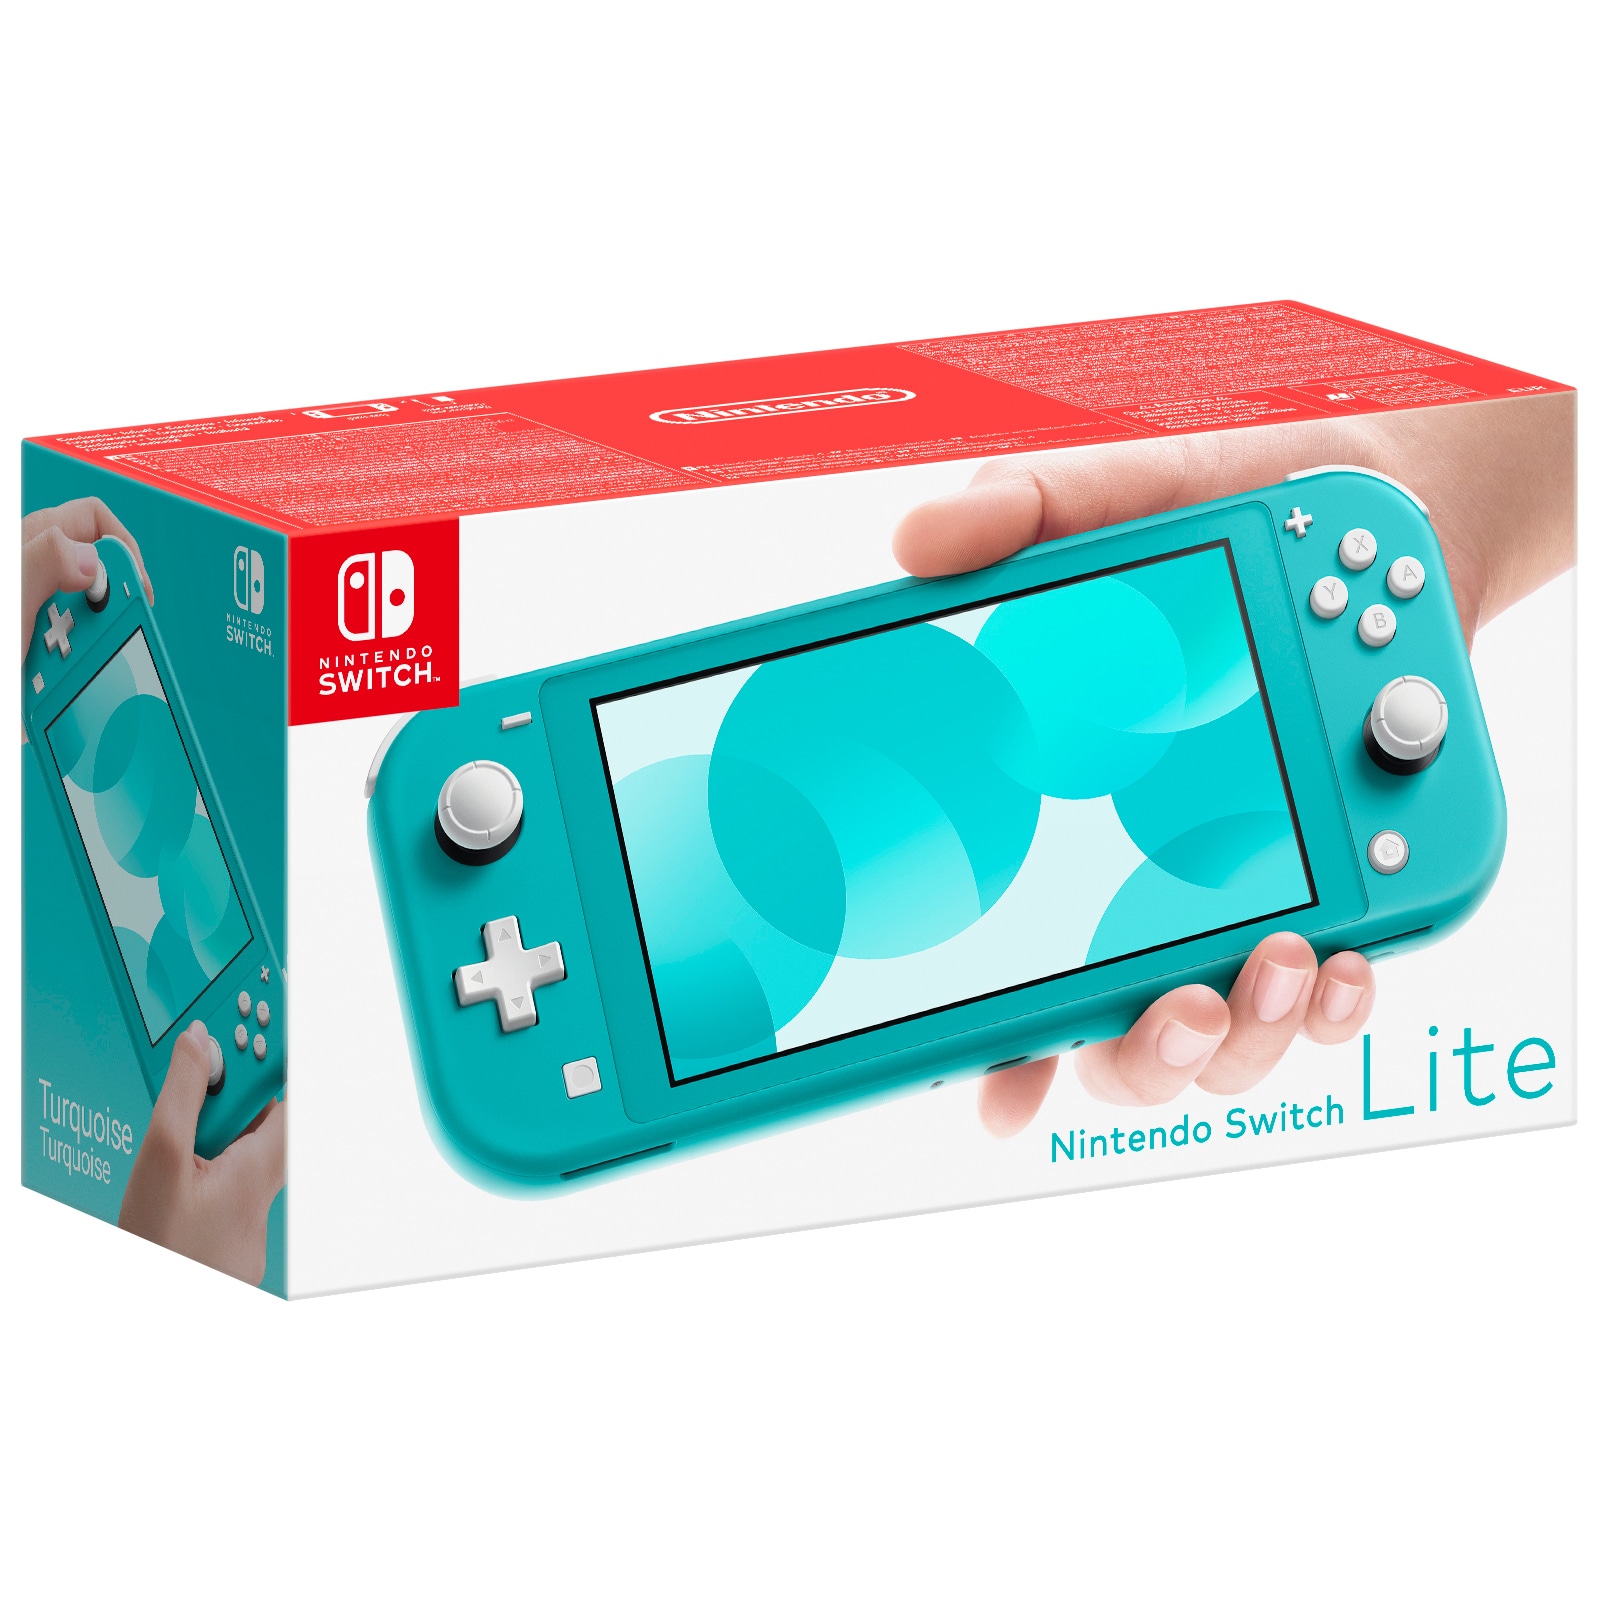 Nintendo Switch Lite spillekonsol (turkis) - Nintendo konsol ...